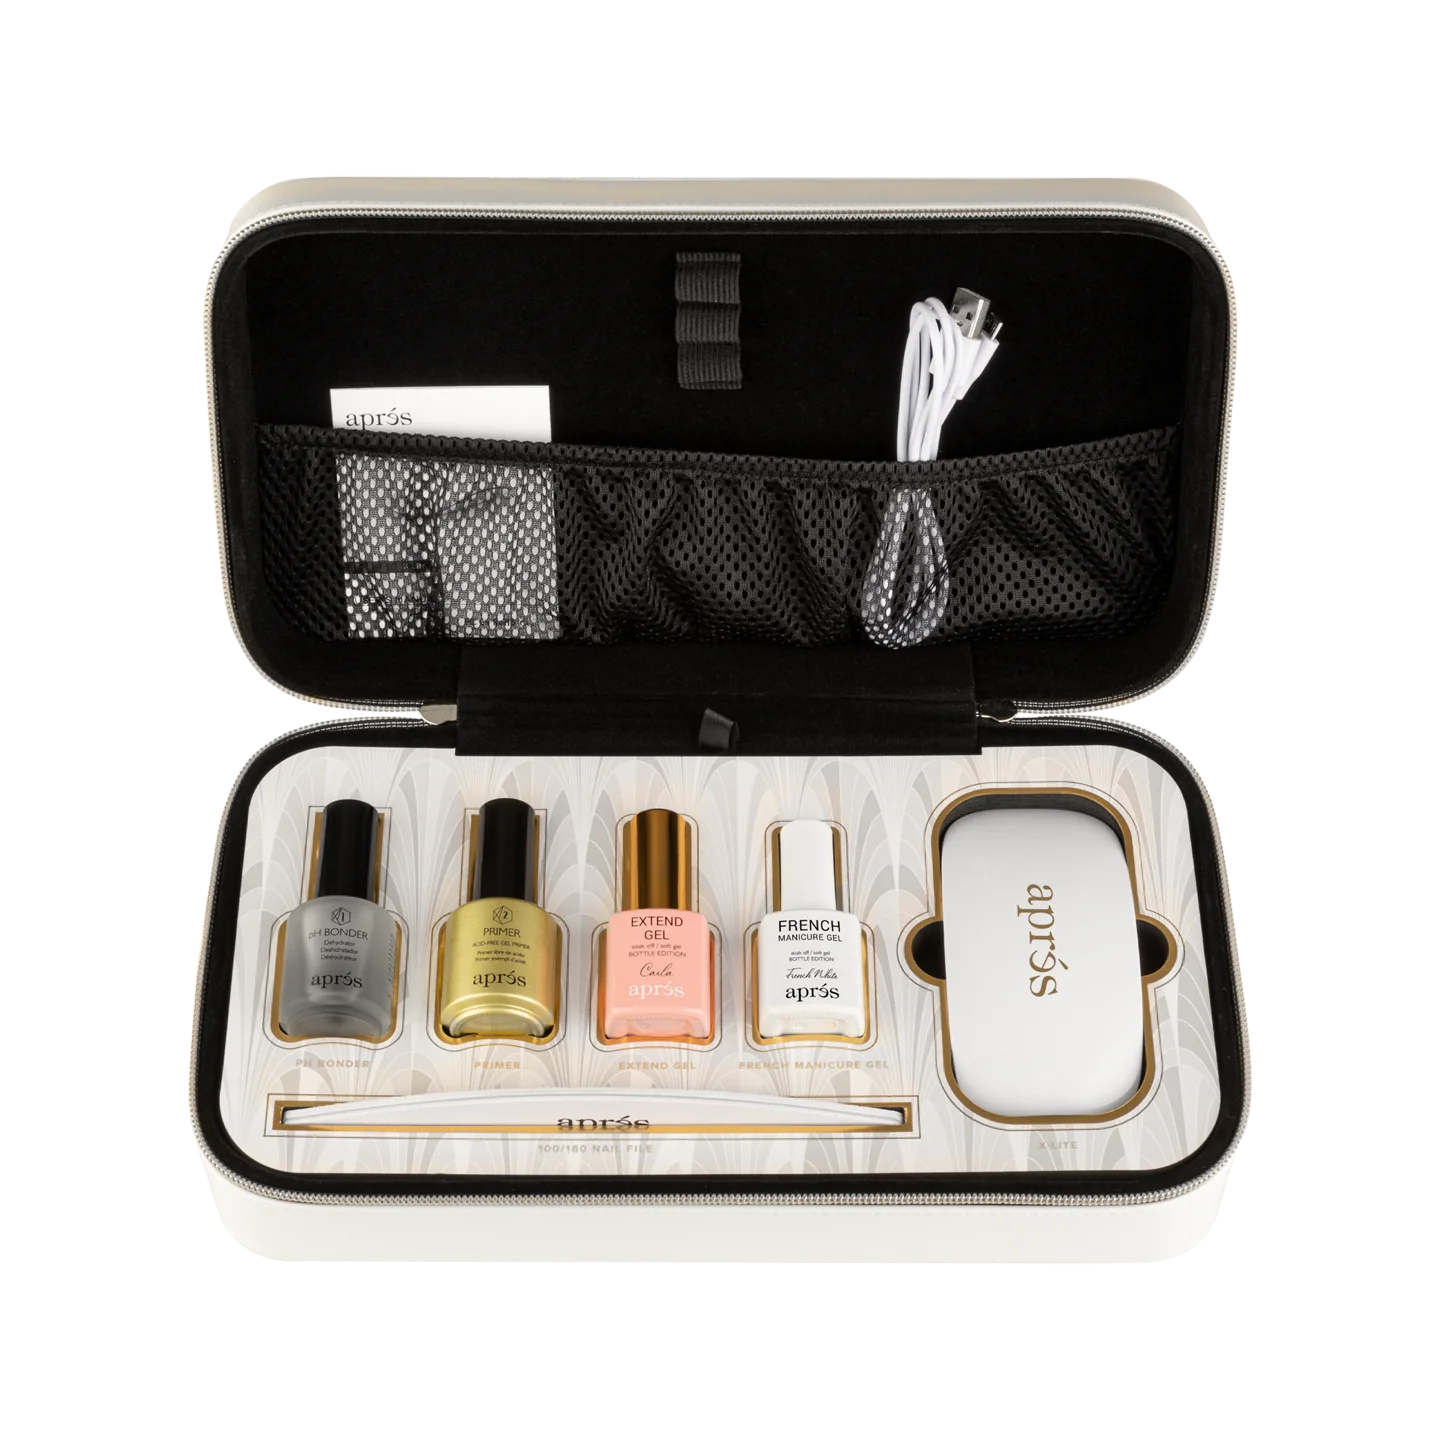 French Manicure Gel-X Kit